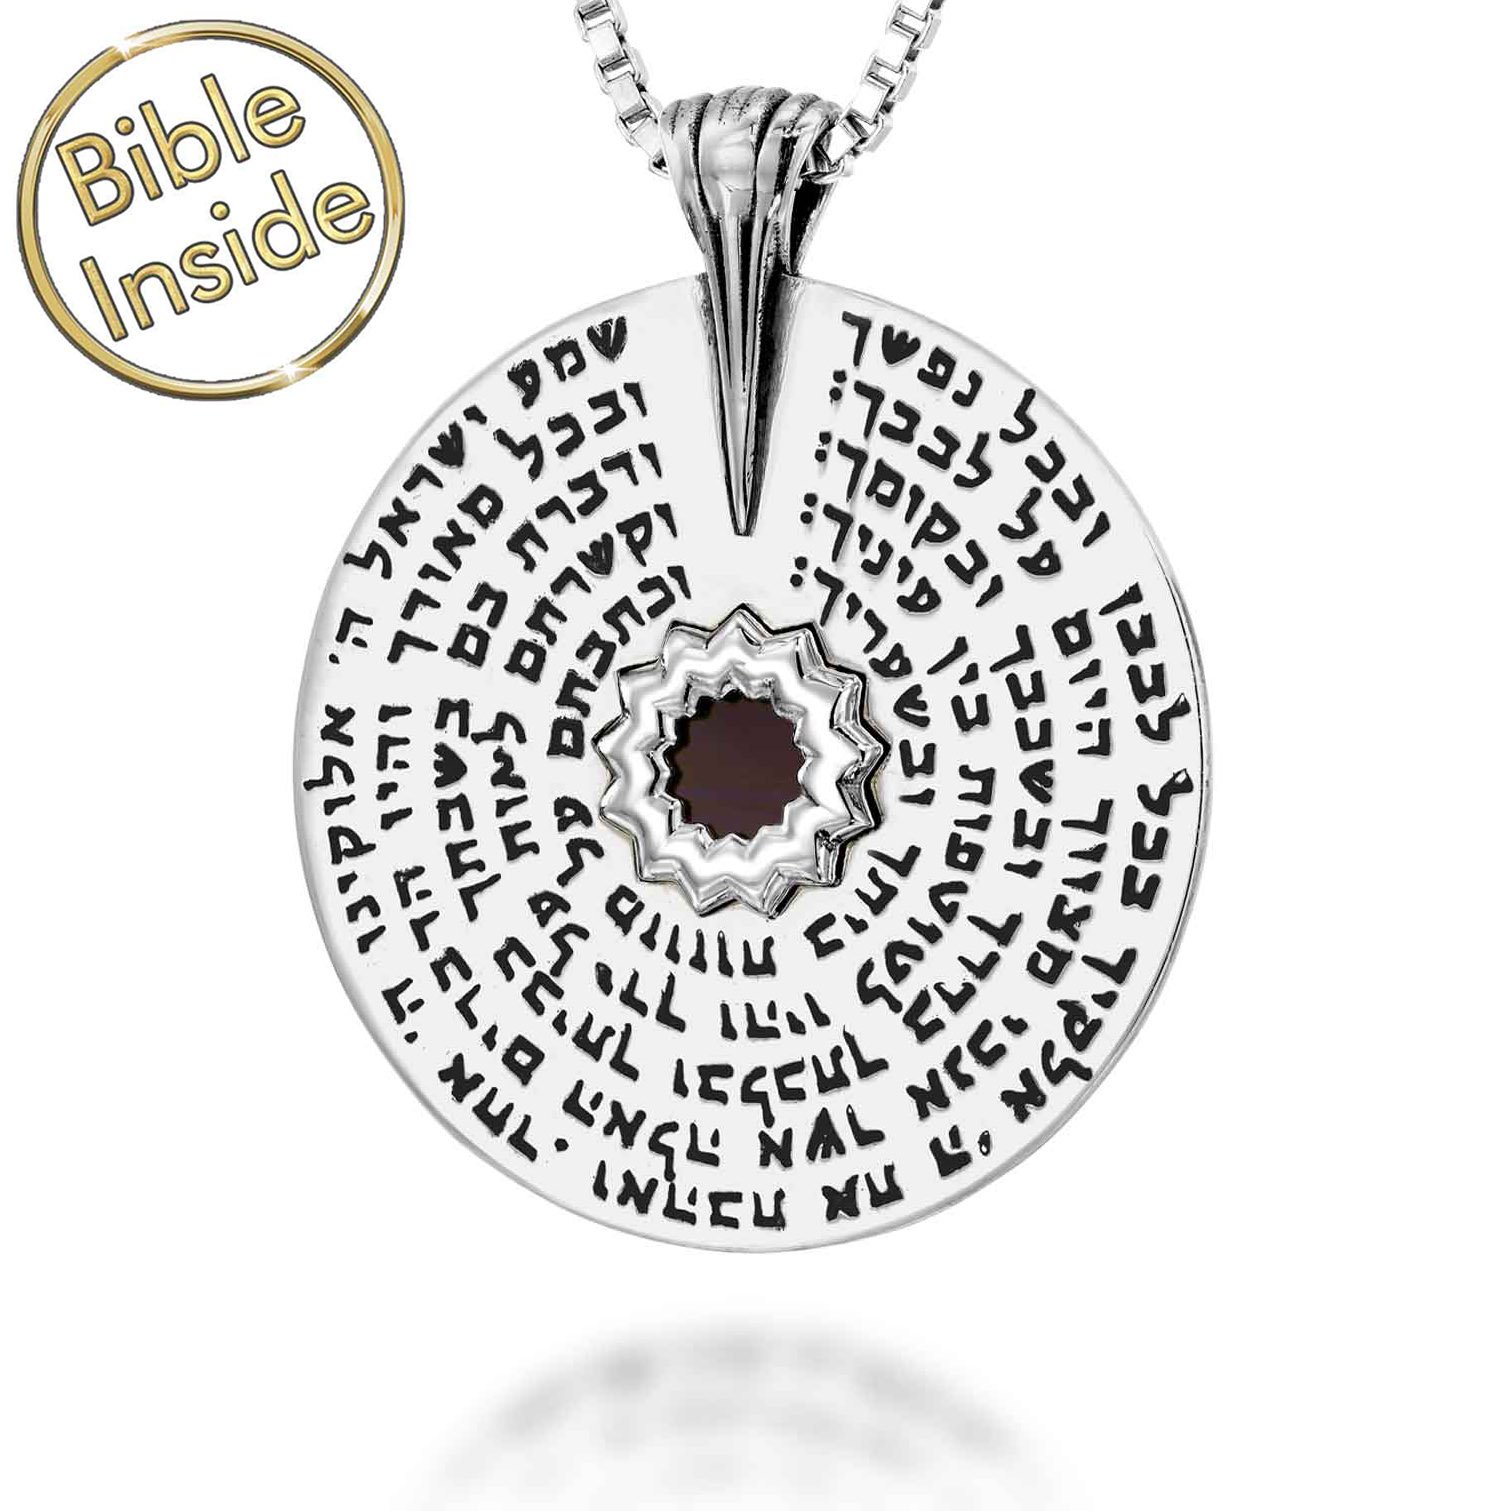 Nano ‘Bible Inside’ Sterling Silver ‘Shema Israel’ in Hebrew Wheel Necklace